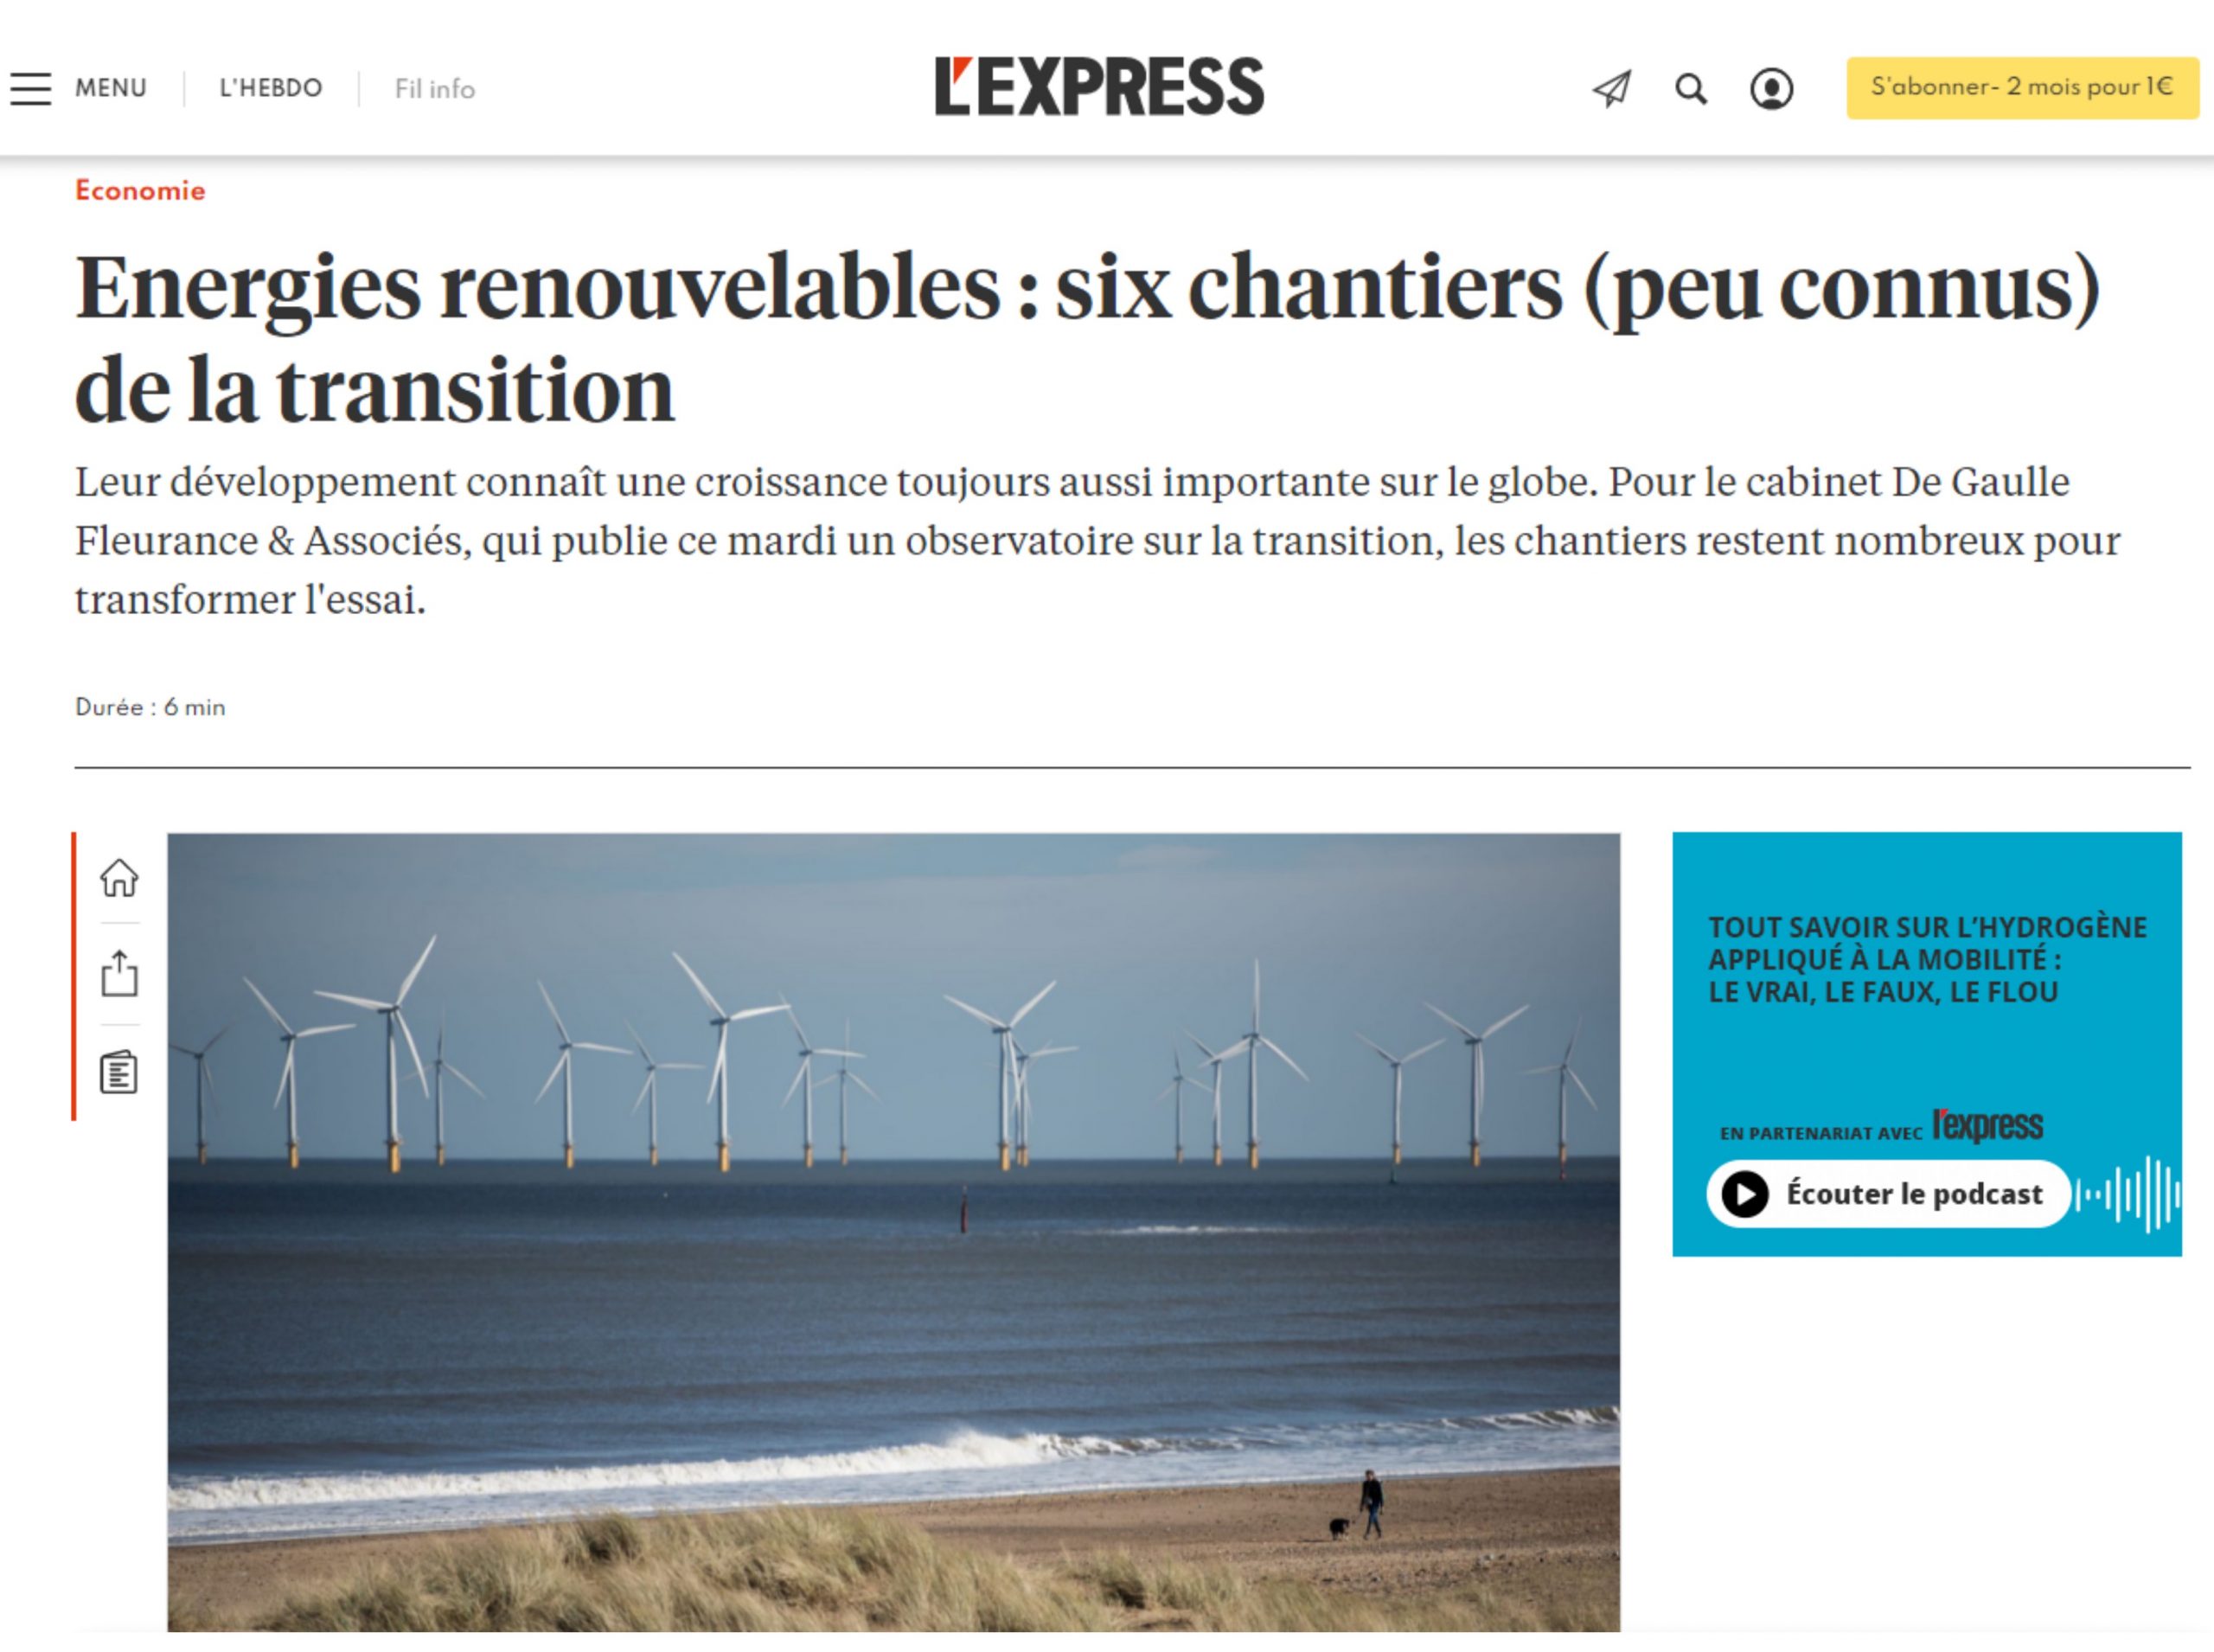 Energies renouvelables-(lexpress.fr)